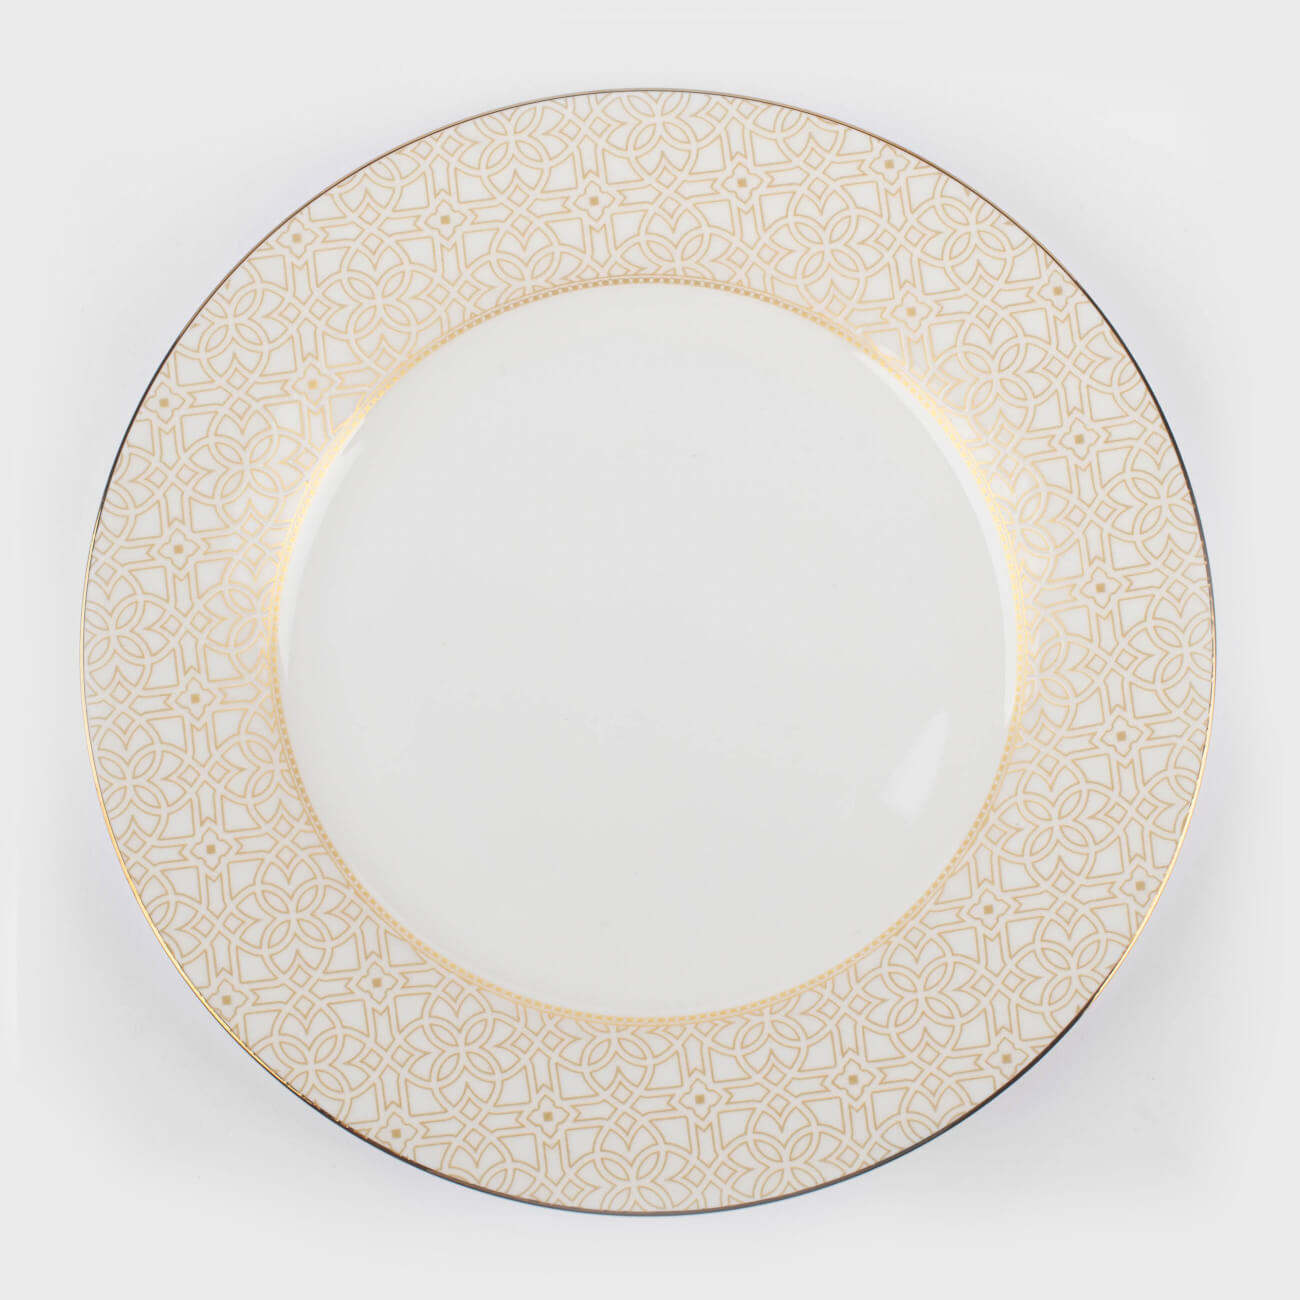 Тарелка десертная, 19 см, фарфор F, с золотистым кантом, Орнамент, Liberty - фото 1